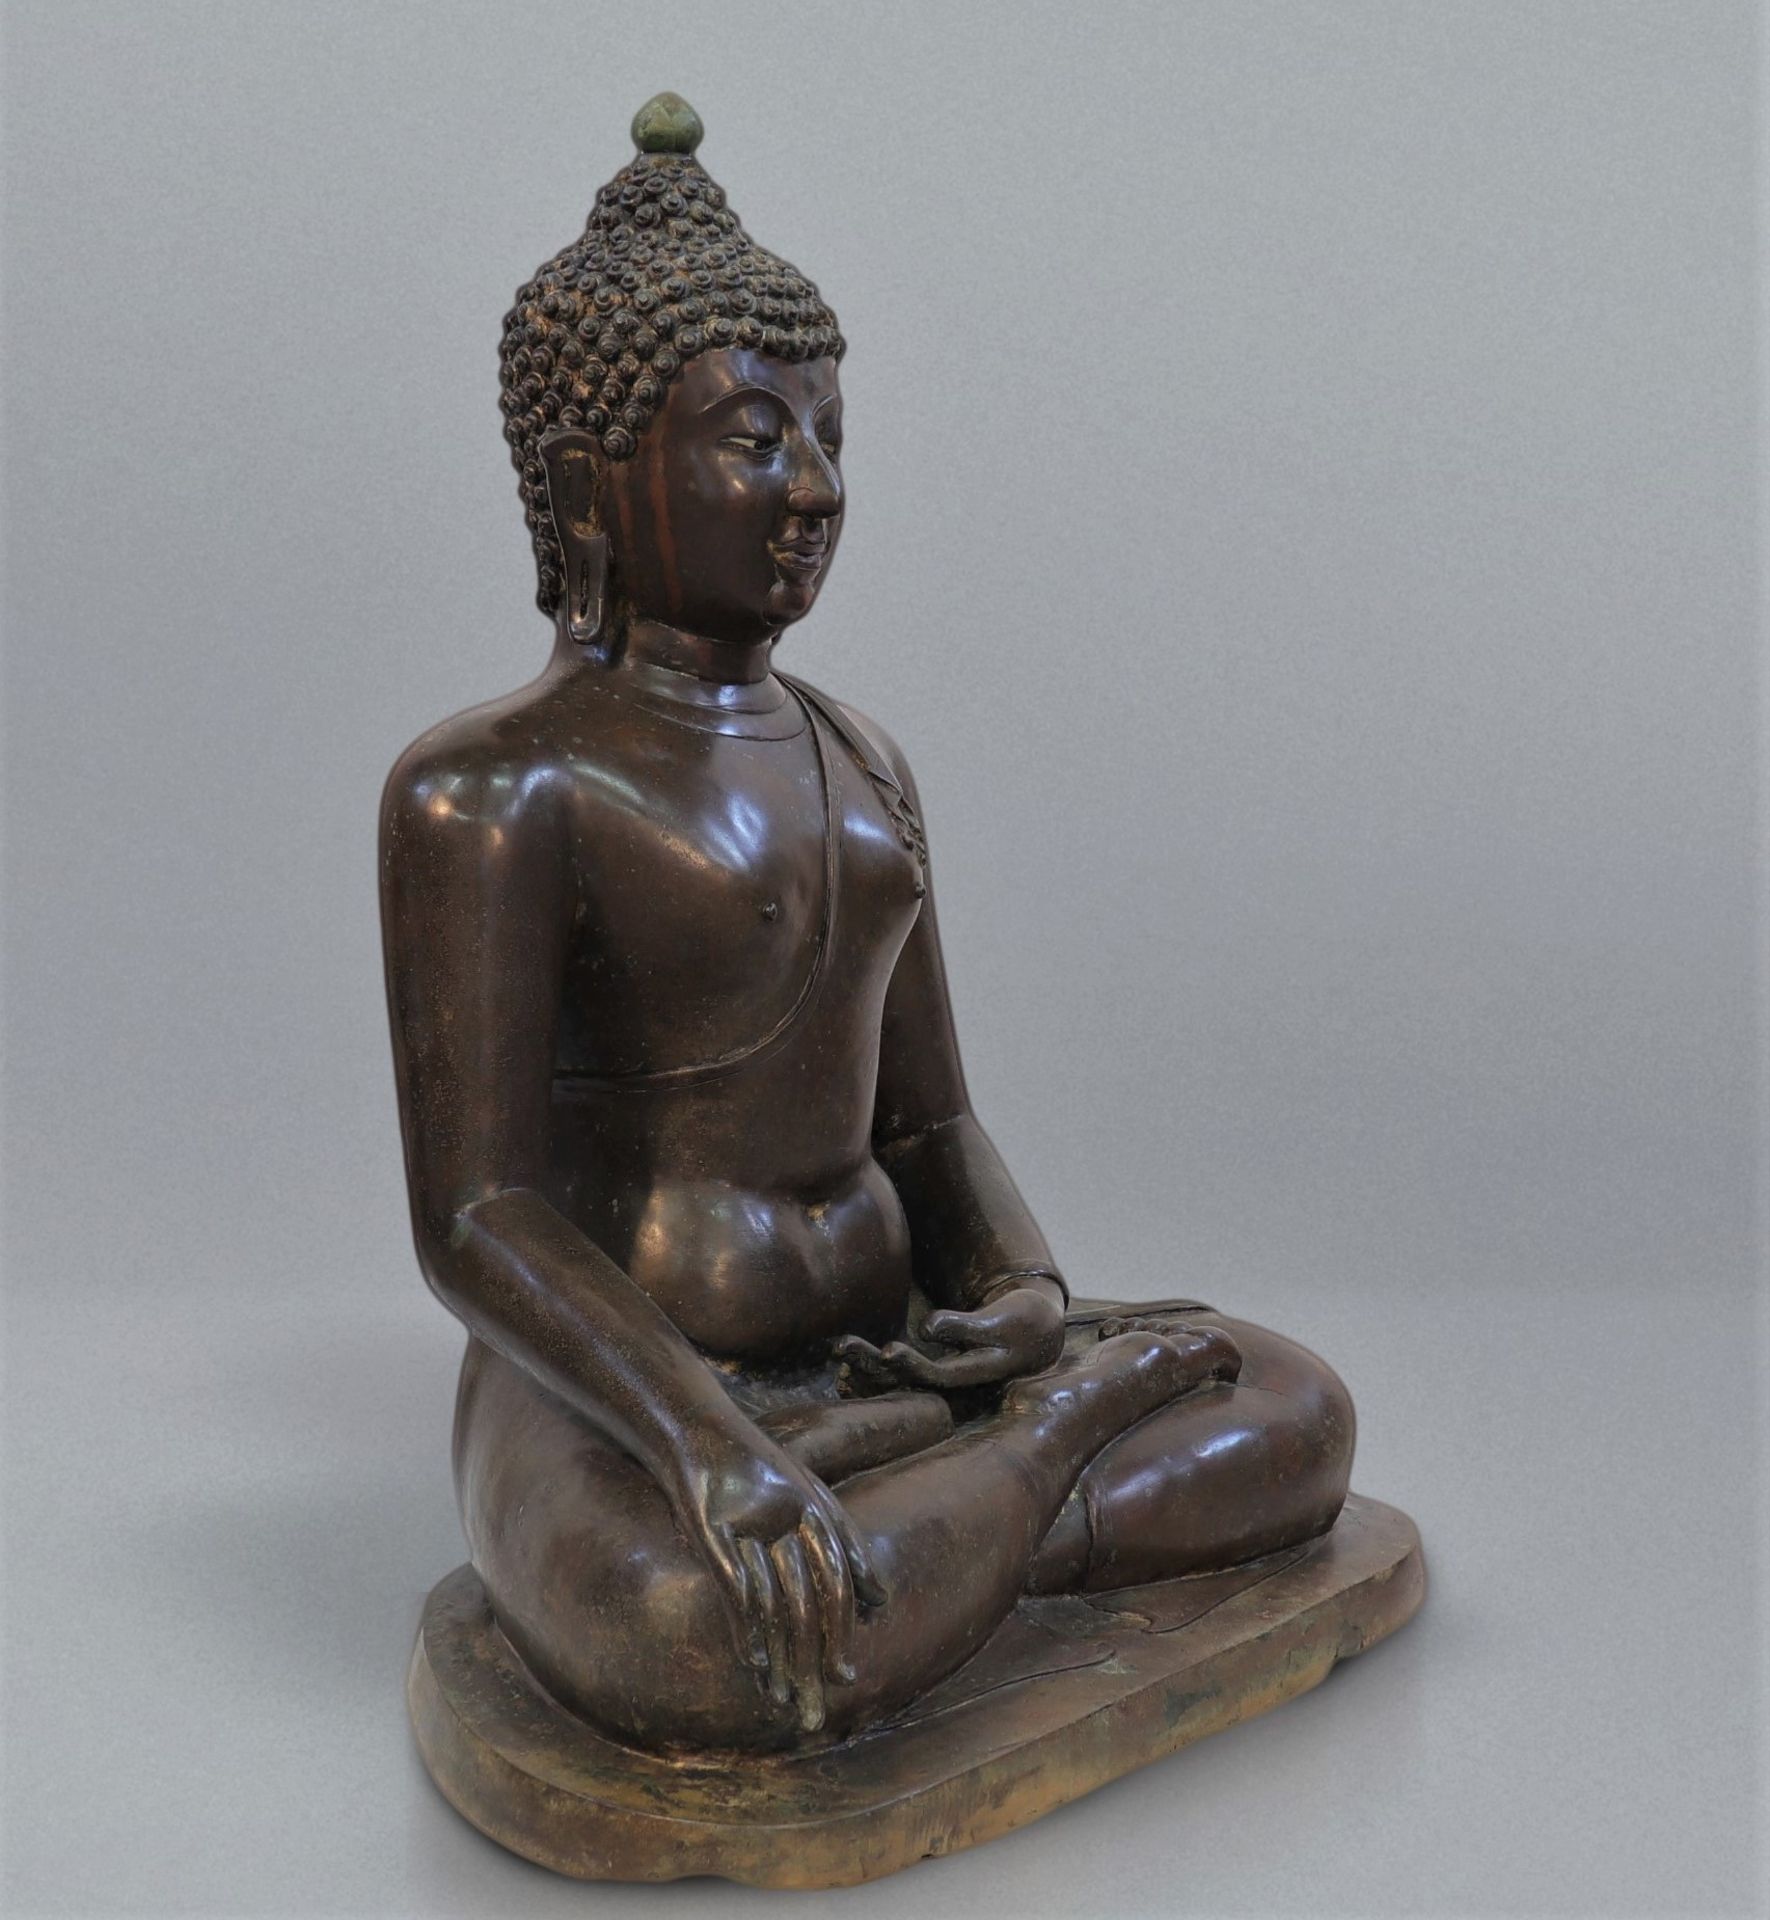 Large Shakyamuni Buddha in bronze with brown and green patina 18th century - Image 4 of 7